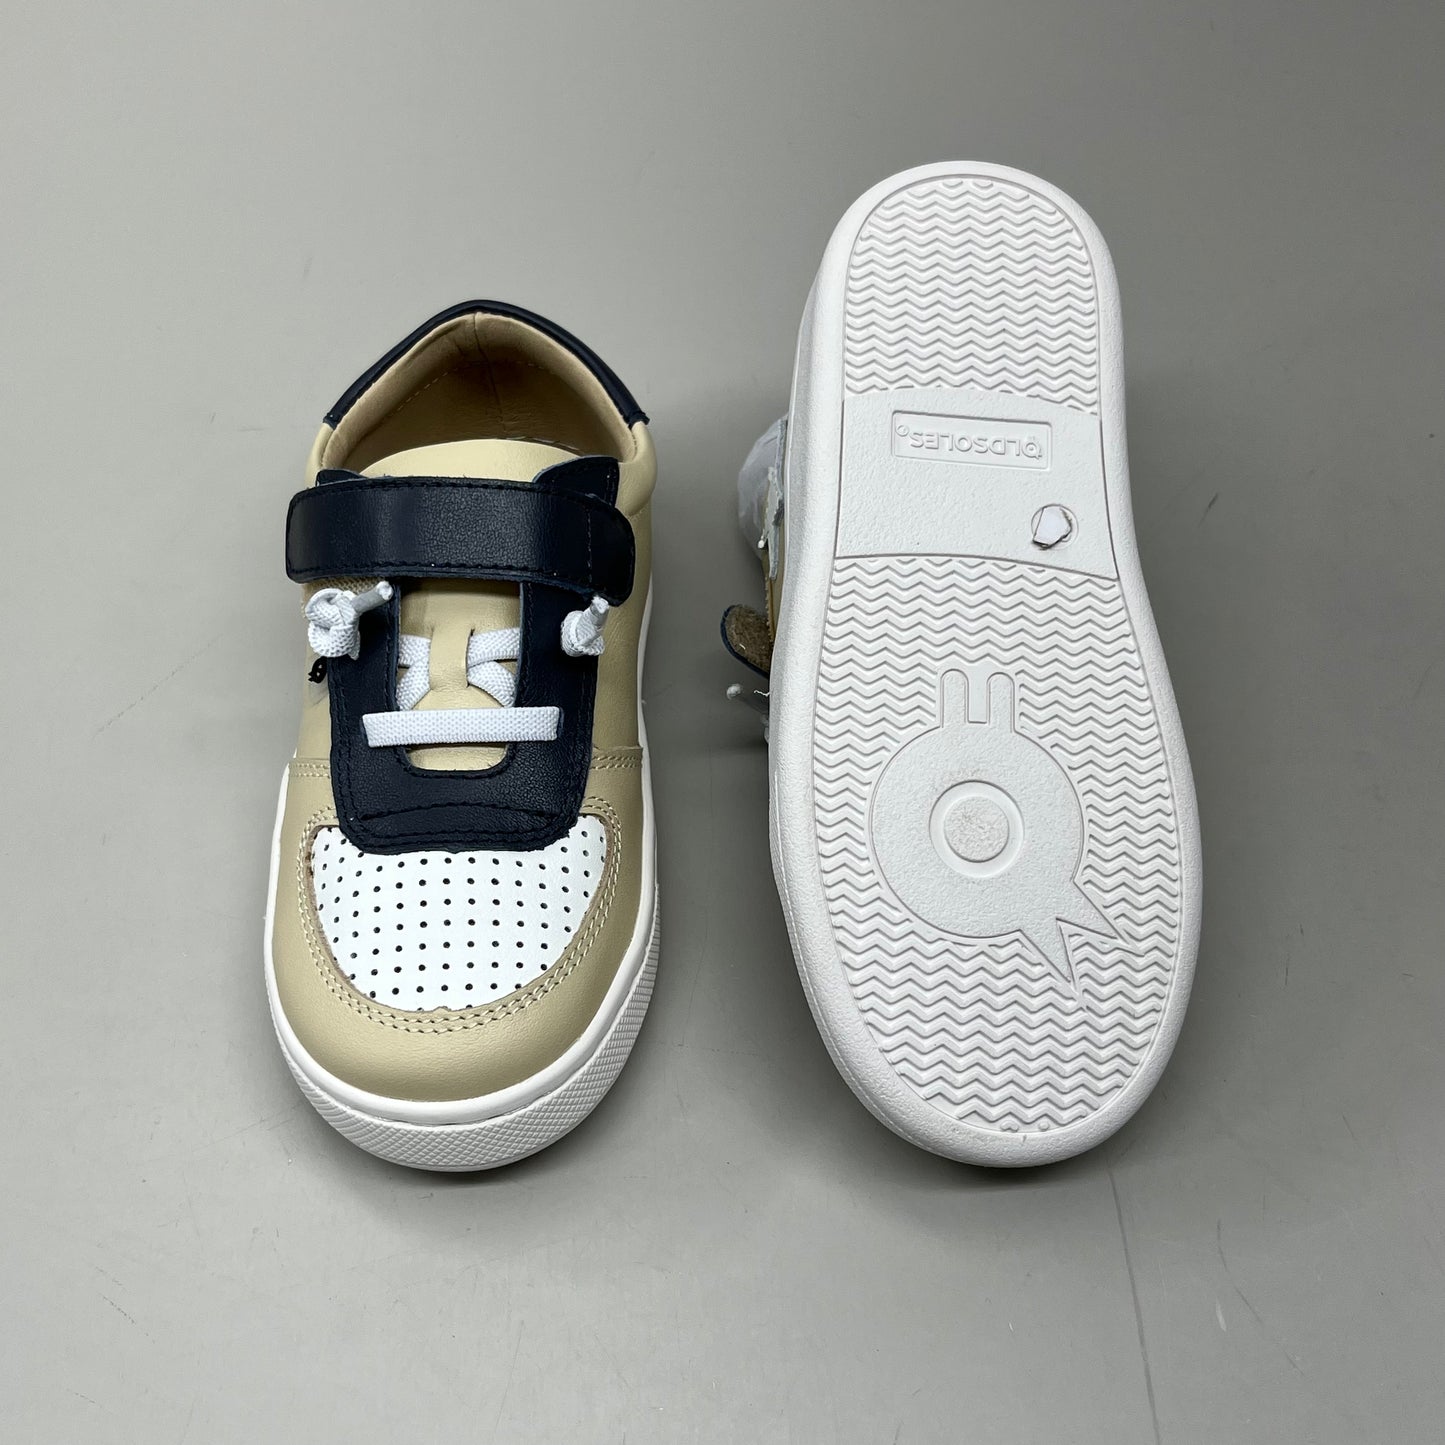 OLD SOLES Runsky Sneakers Leather Shoe Kid’s Sz 26 US 9.5 Cream/Navy/Snow #6135